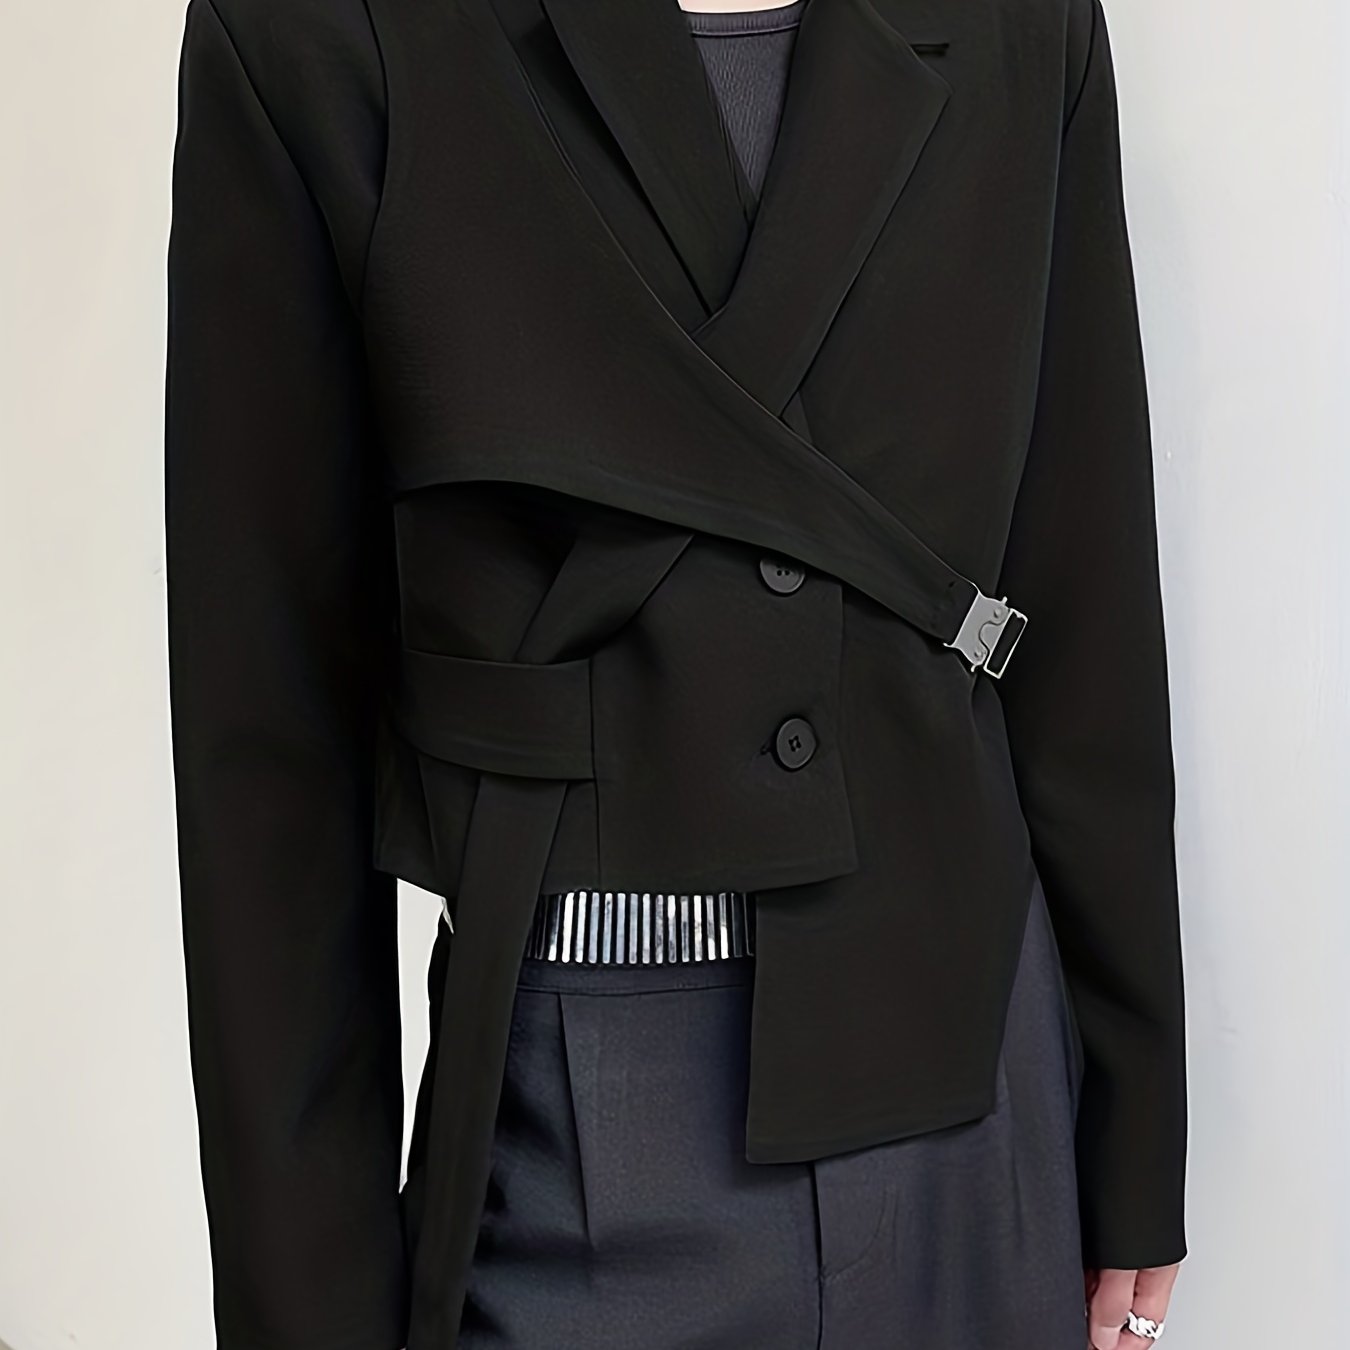 Men's Korean Style Irregular Design Blazer With Belt, Long Sleeve High Waist Suit Jackets For Party, Funky Club Wear Coat Outwear Tops, Men's Clothing, Plus Size